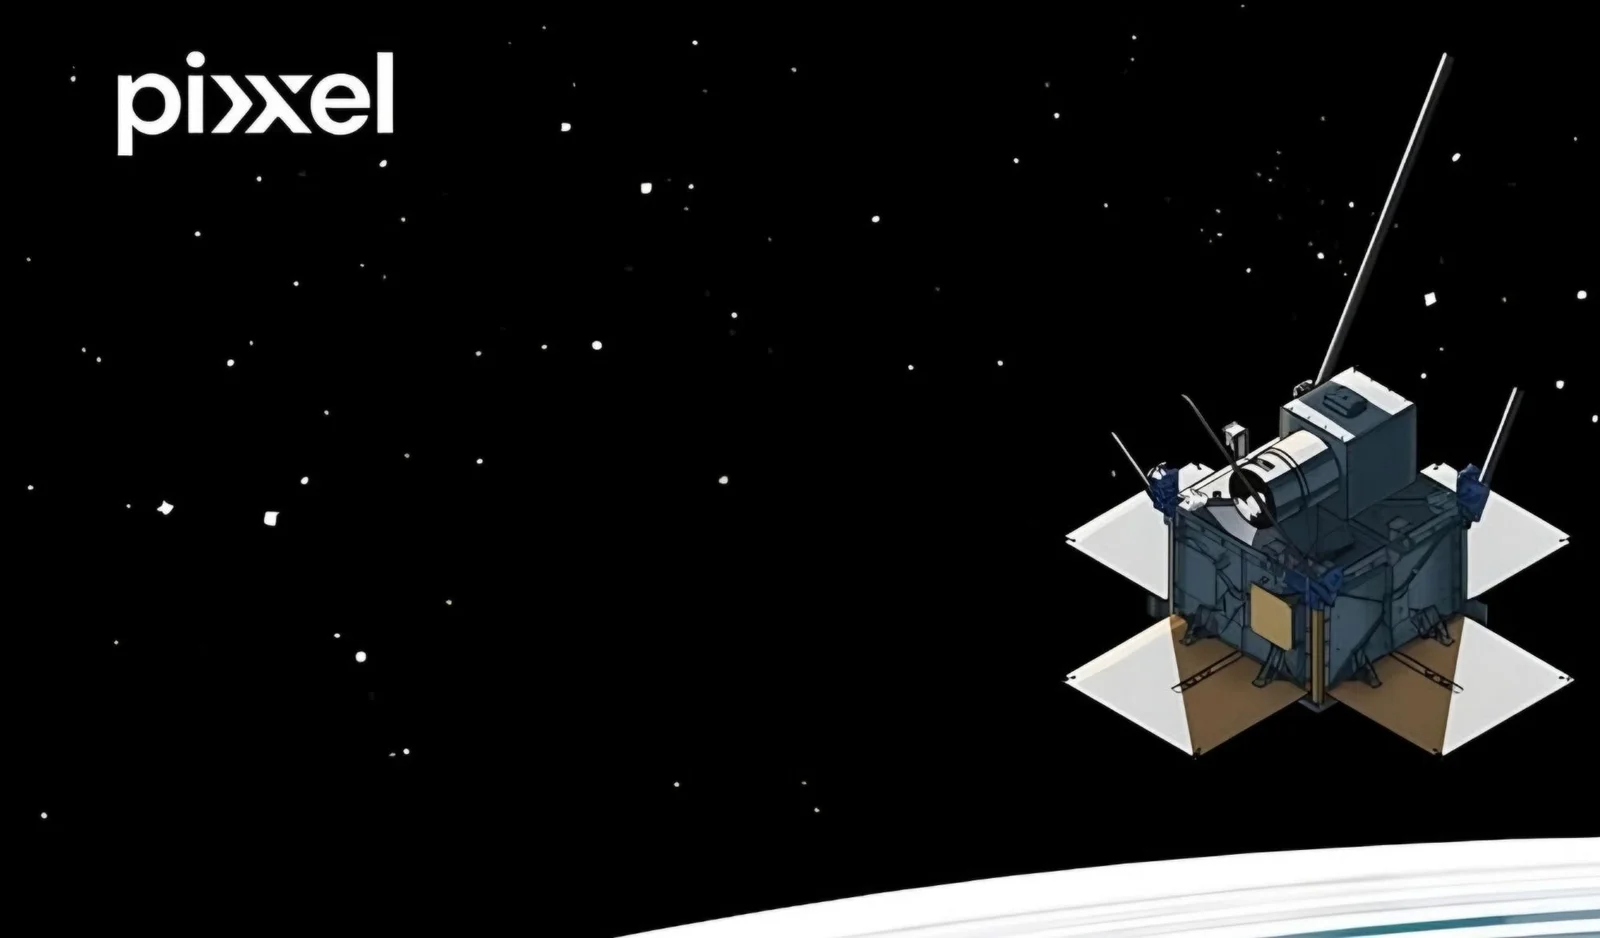 Pixxel to Deploy Six Satellites in June